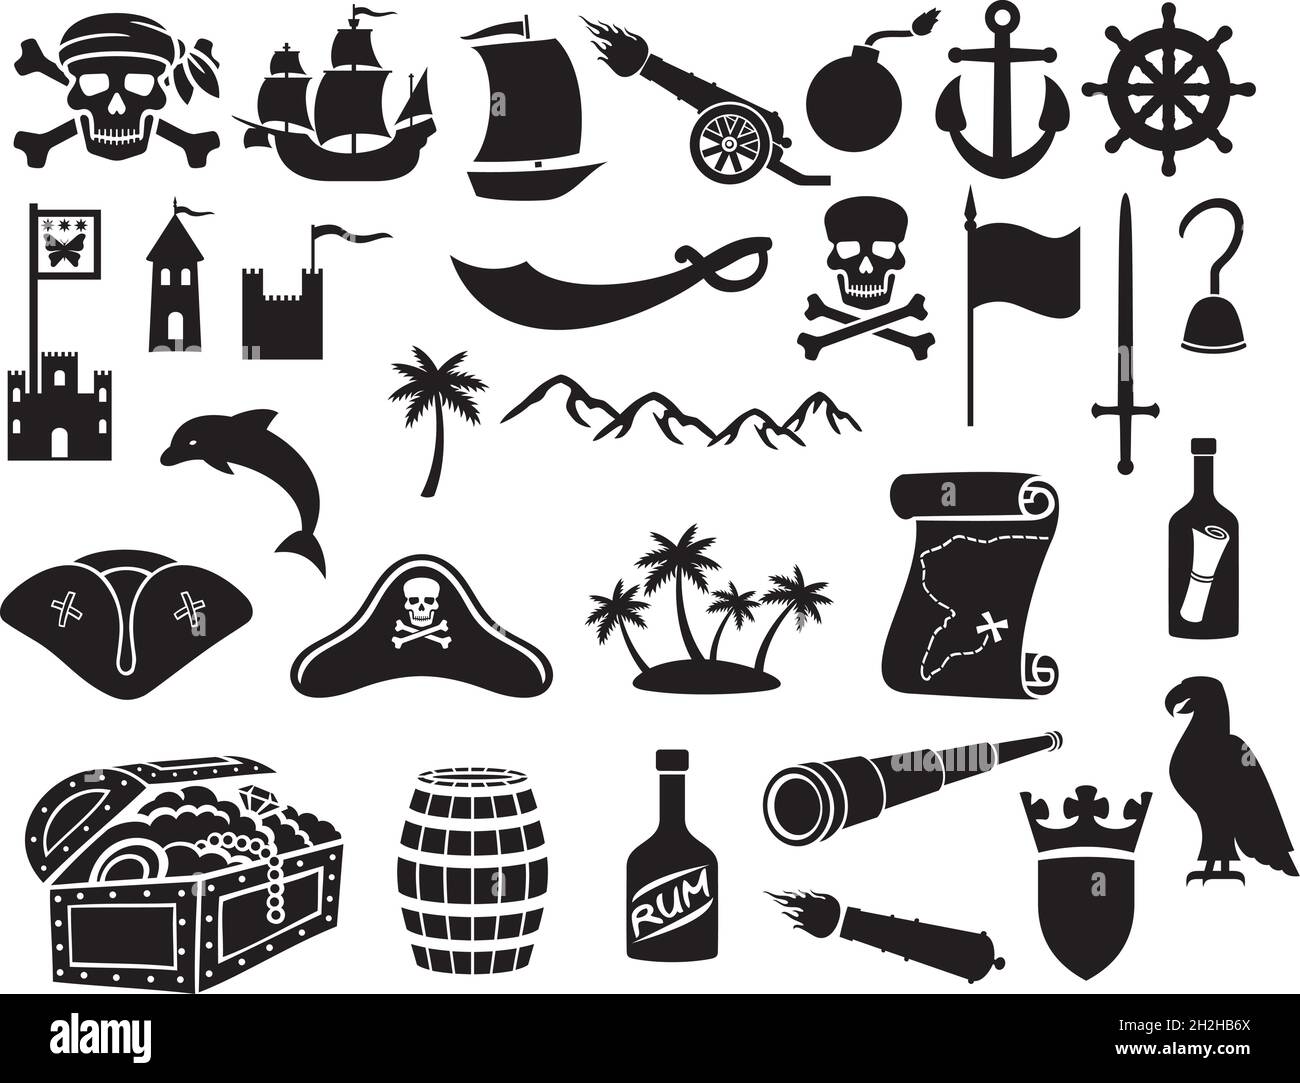 Piraten Symbole setzen Vektor-Illustration Stock Vektor